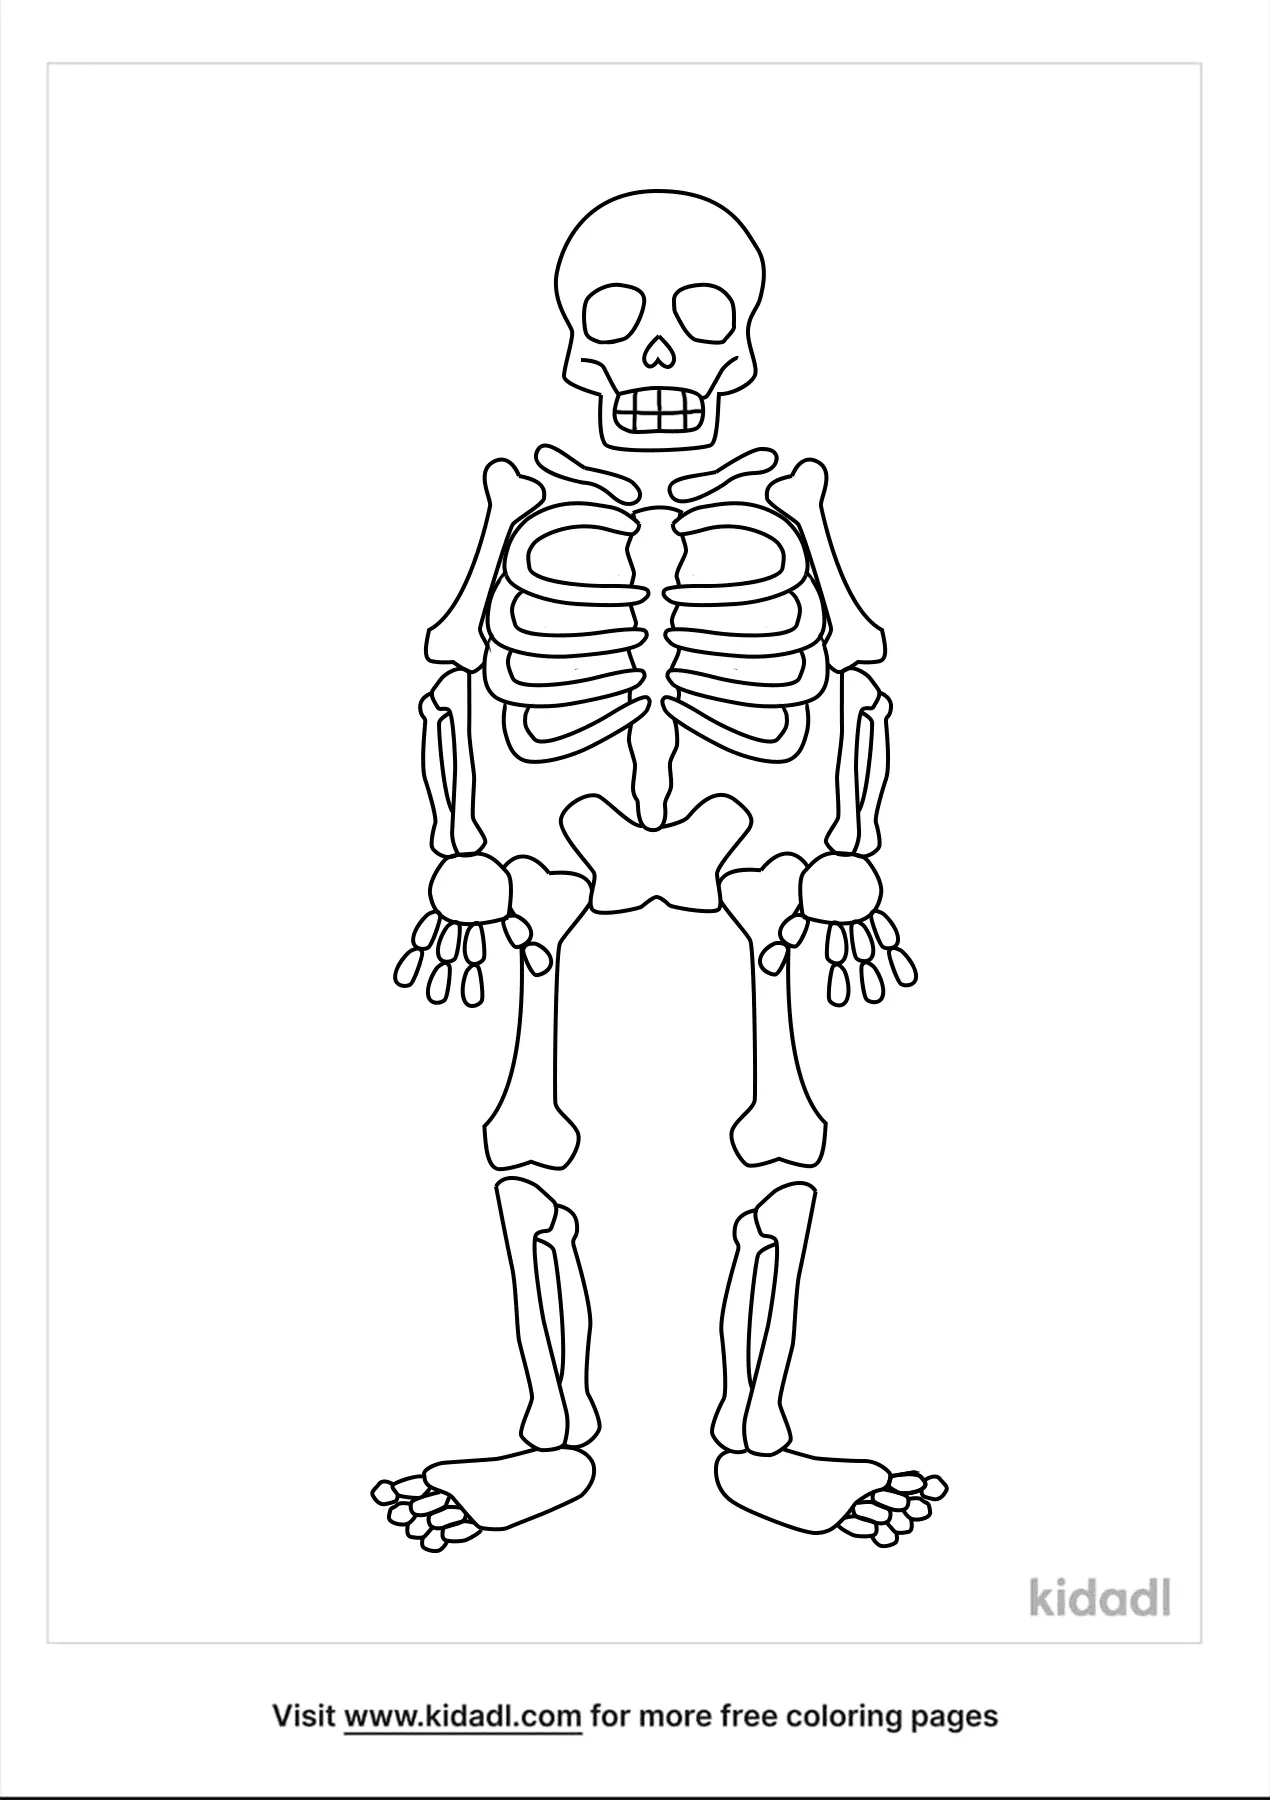 Рисунок скелет человека поэтапно